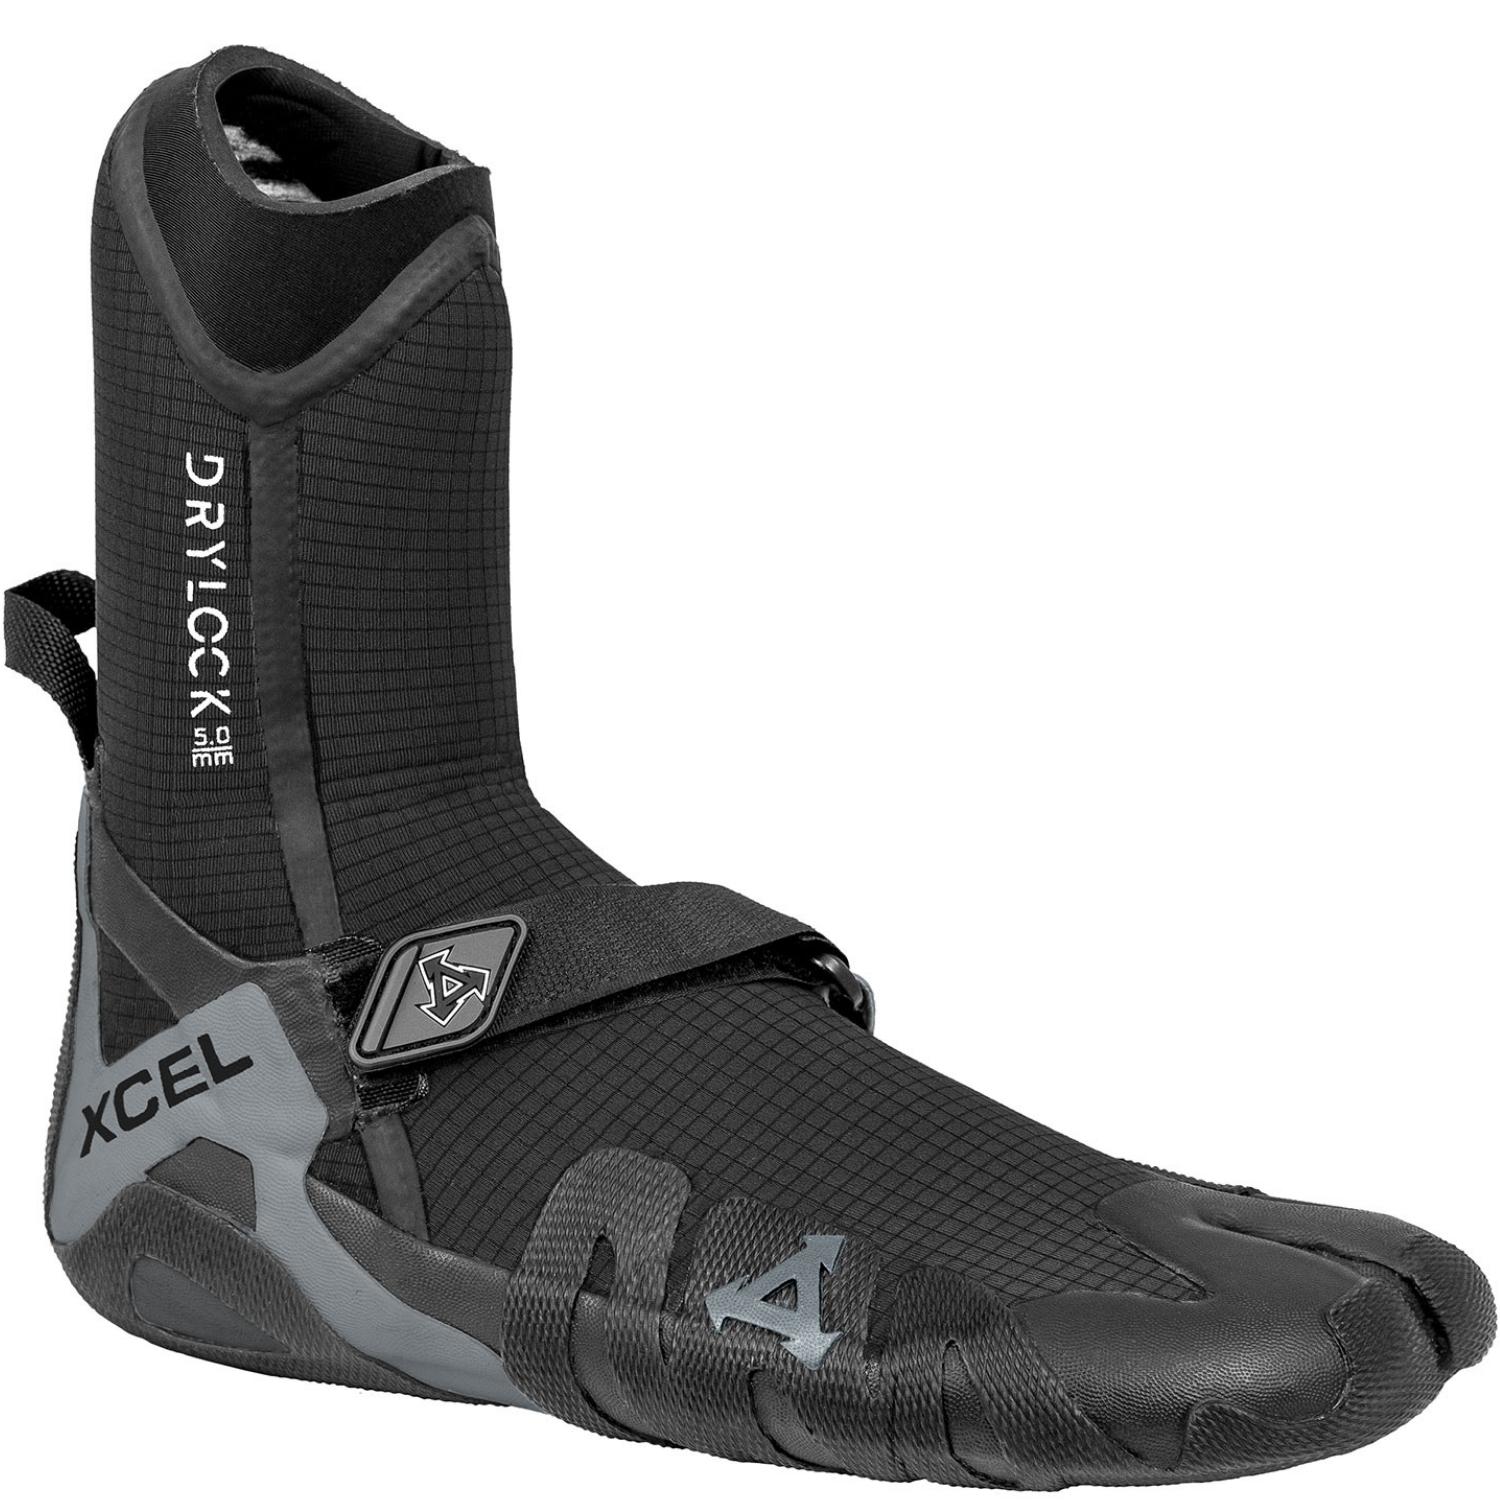 Xcel 5mm Drylock Split Toe Wetsuit Boots 2021/22 - Black - Split Toe Wetsuit Boots by Xcel